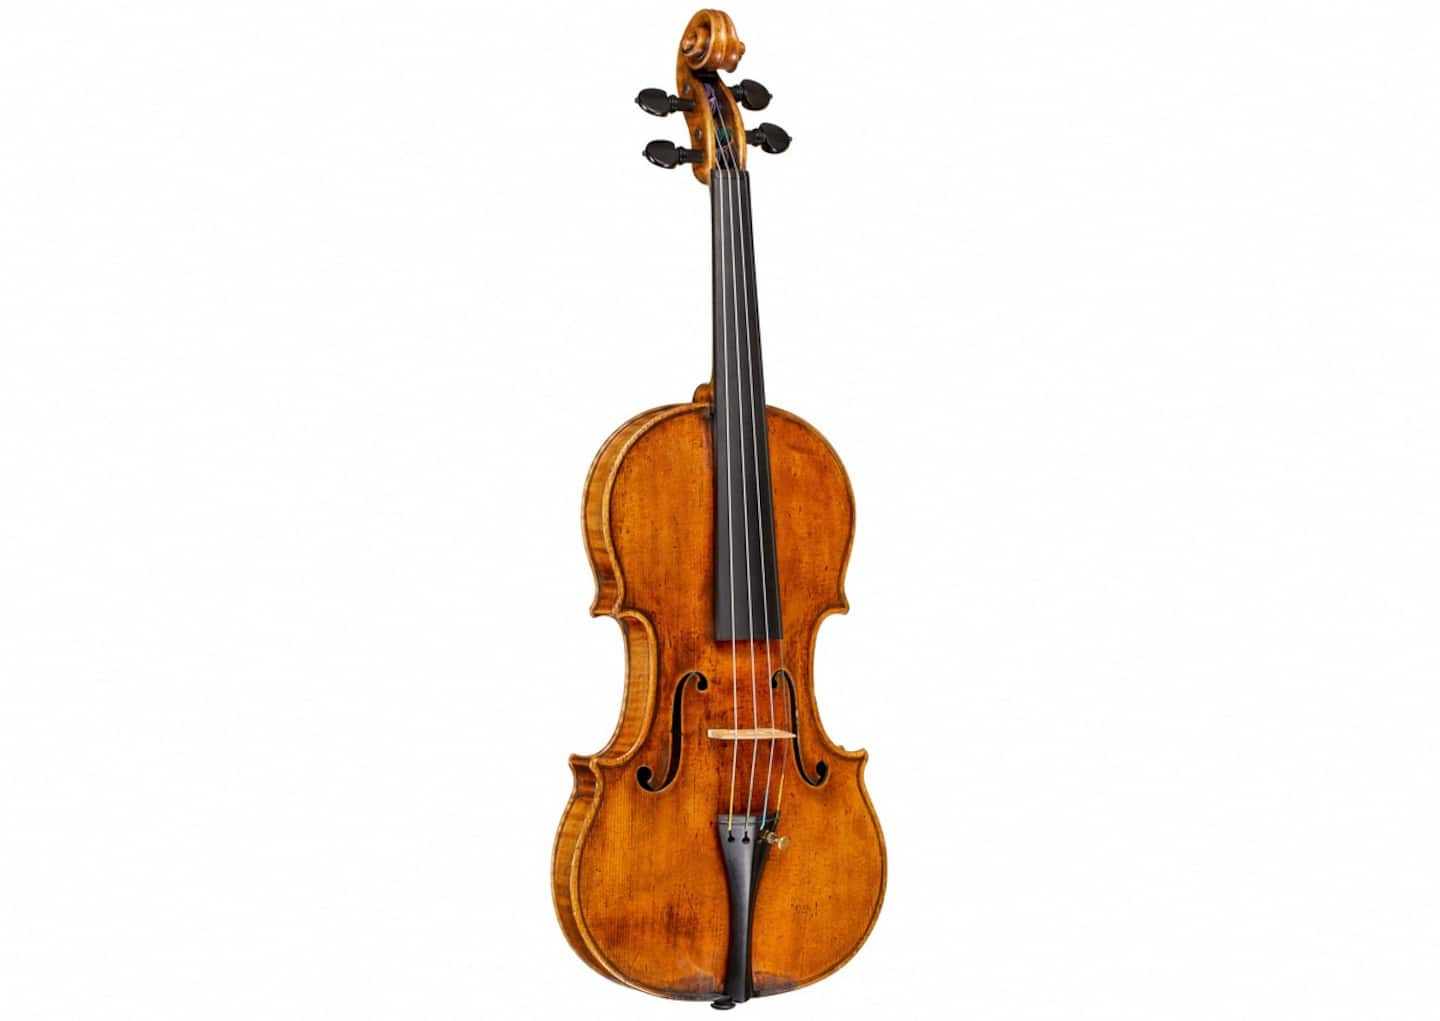 A rare Stradivarius sold for $15.3 million